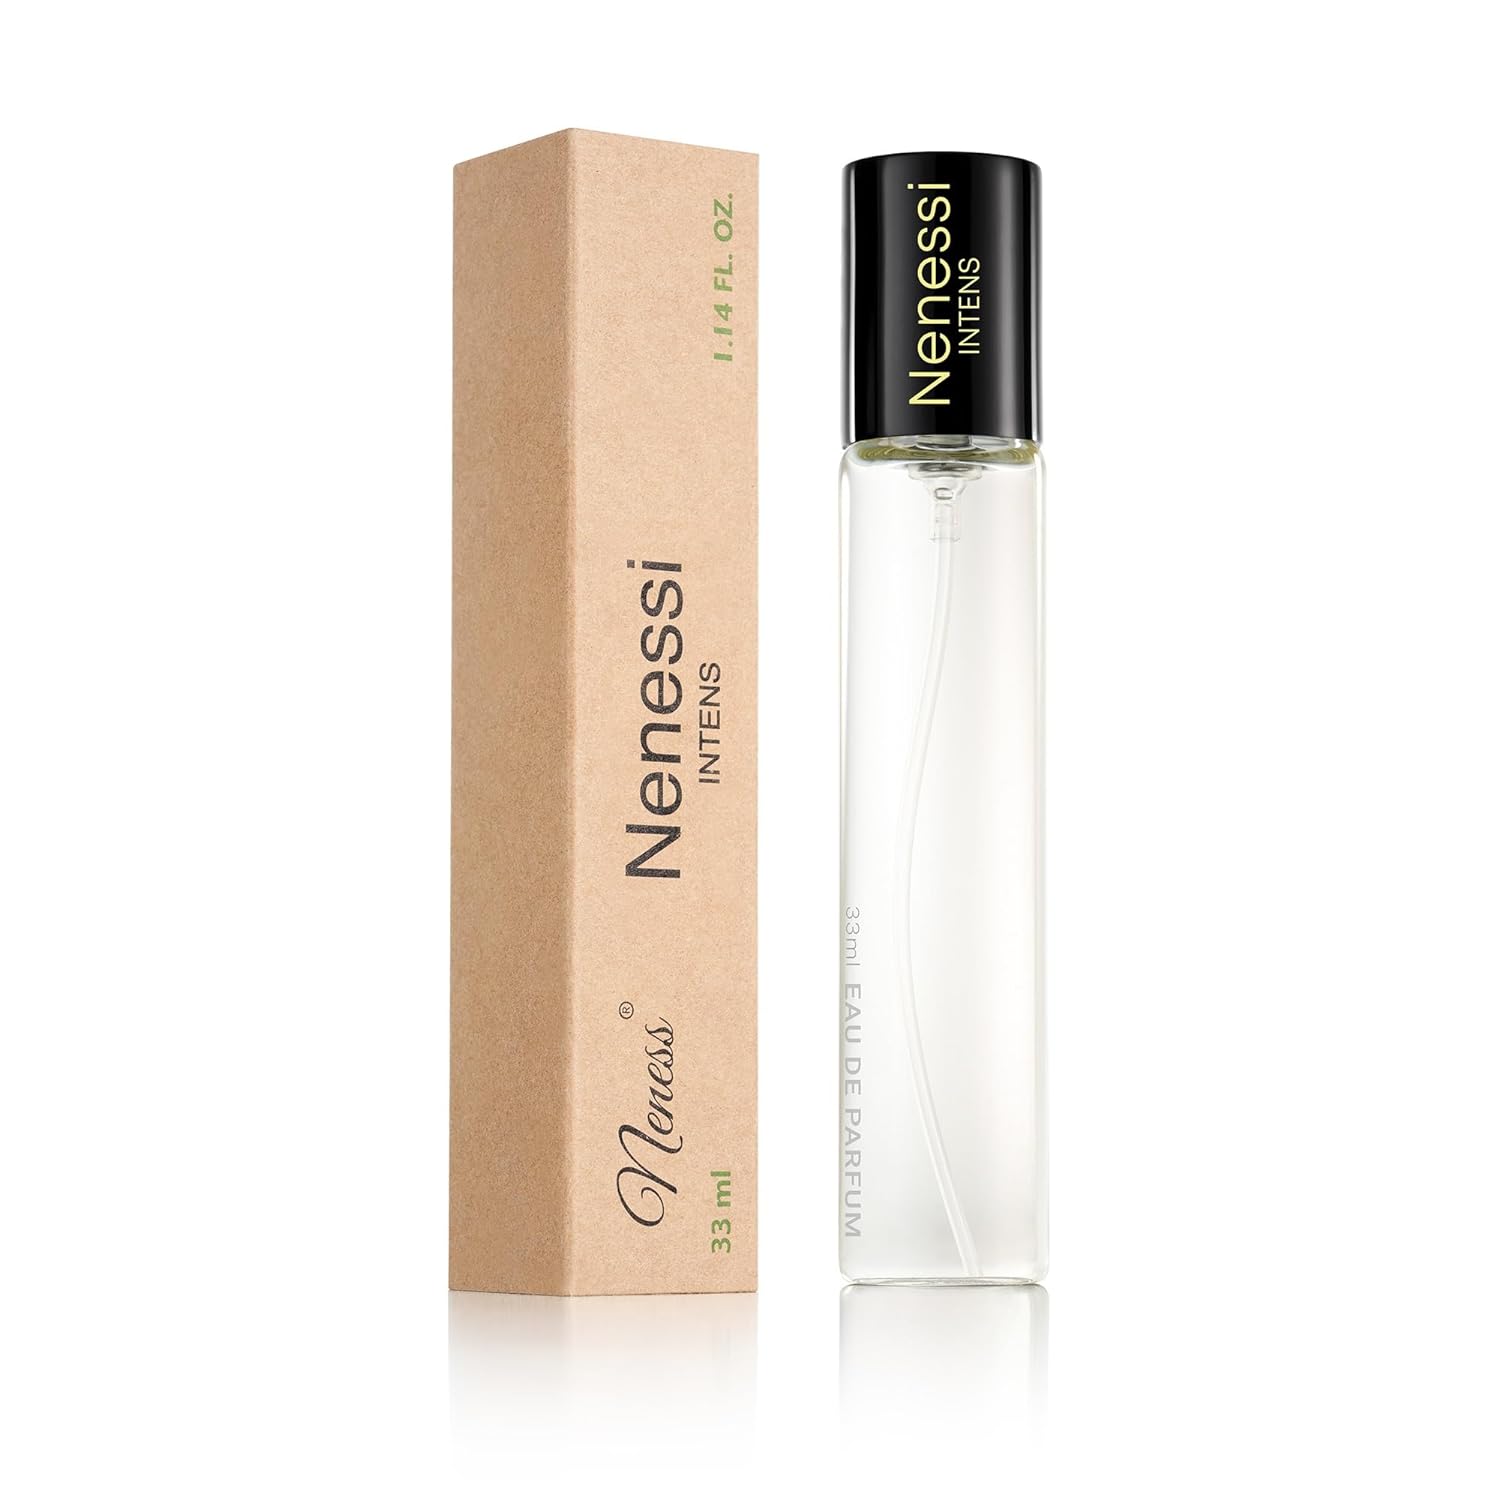 NenesSi Intense Women\'s Perfume, Eau de Parfum, Bold and Feminine Fragrance for Any Occasion, 33 ml